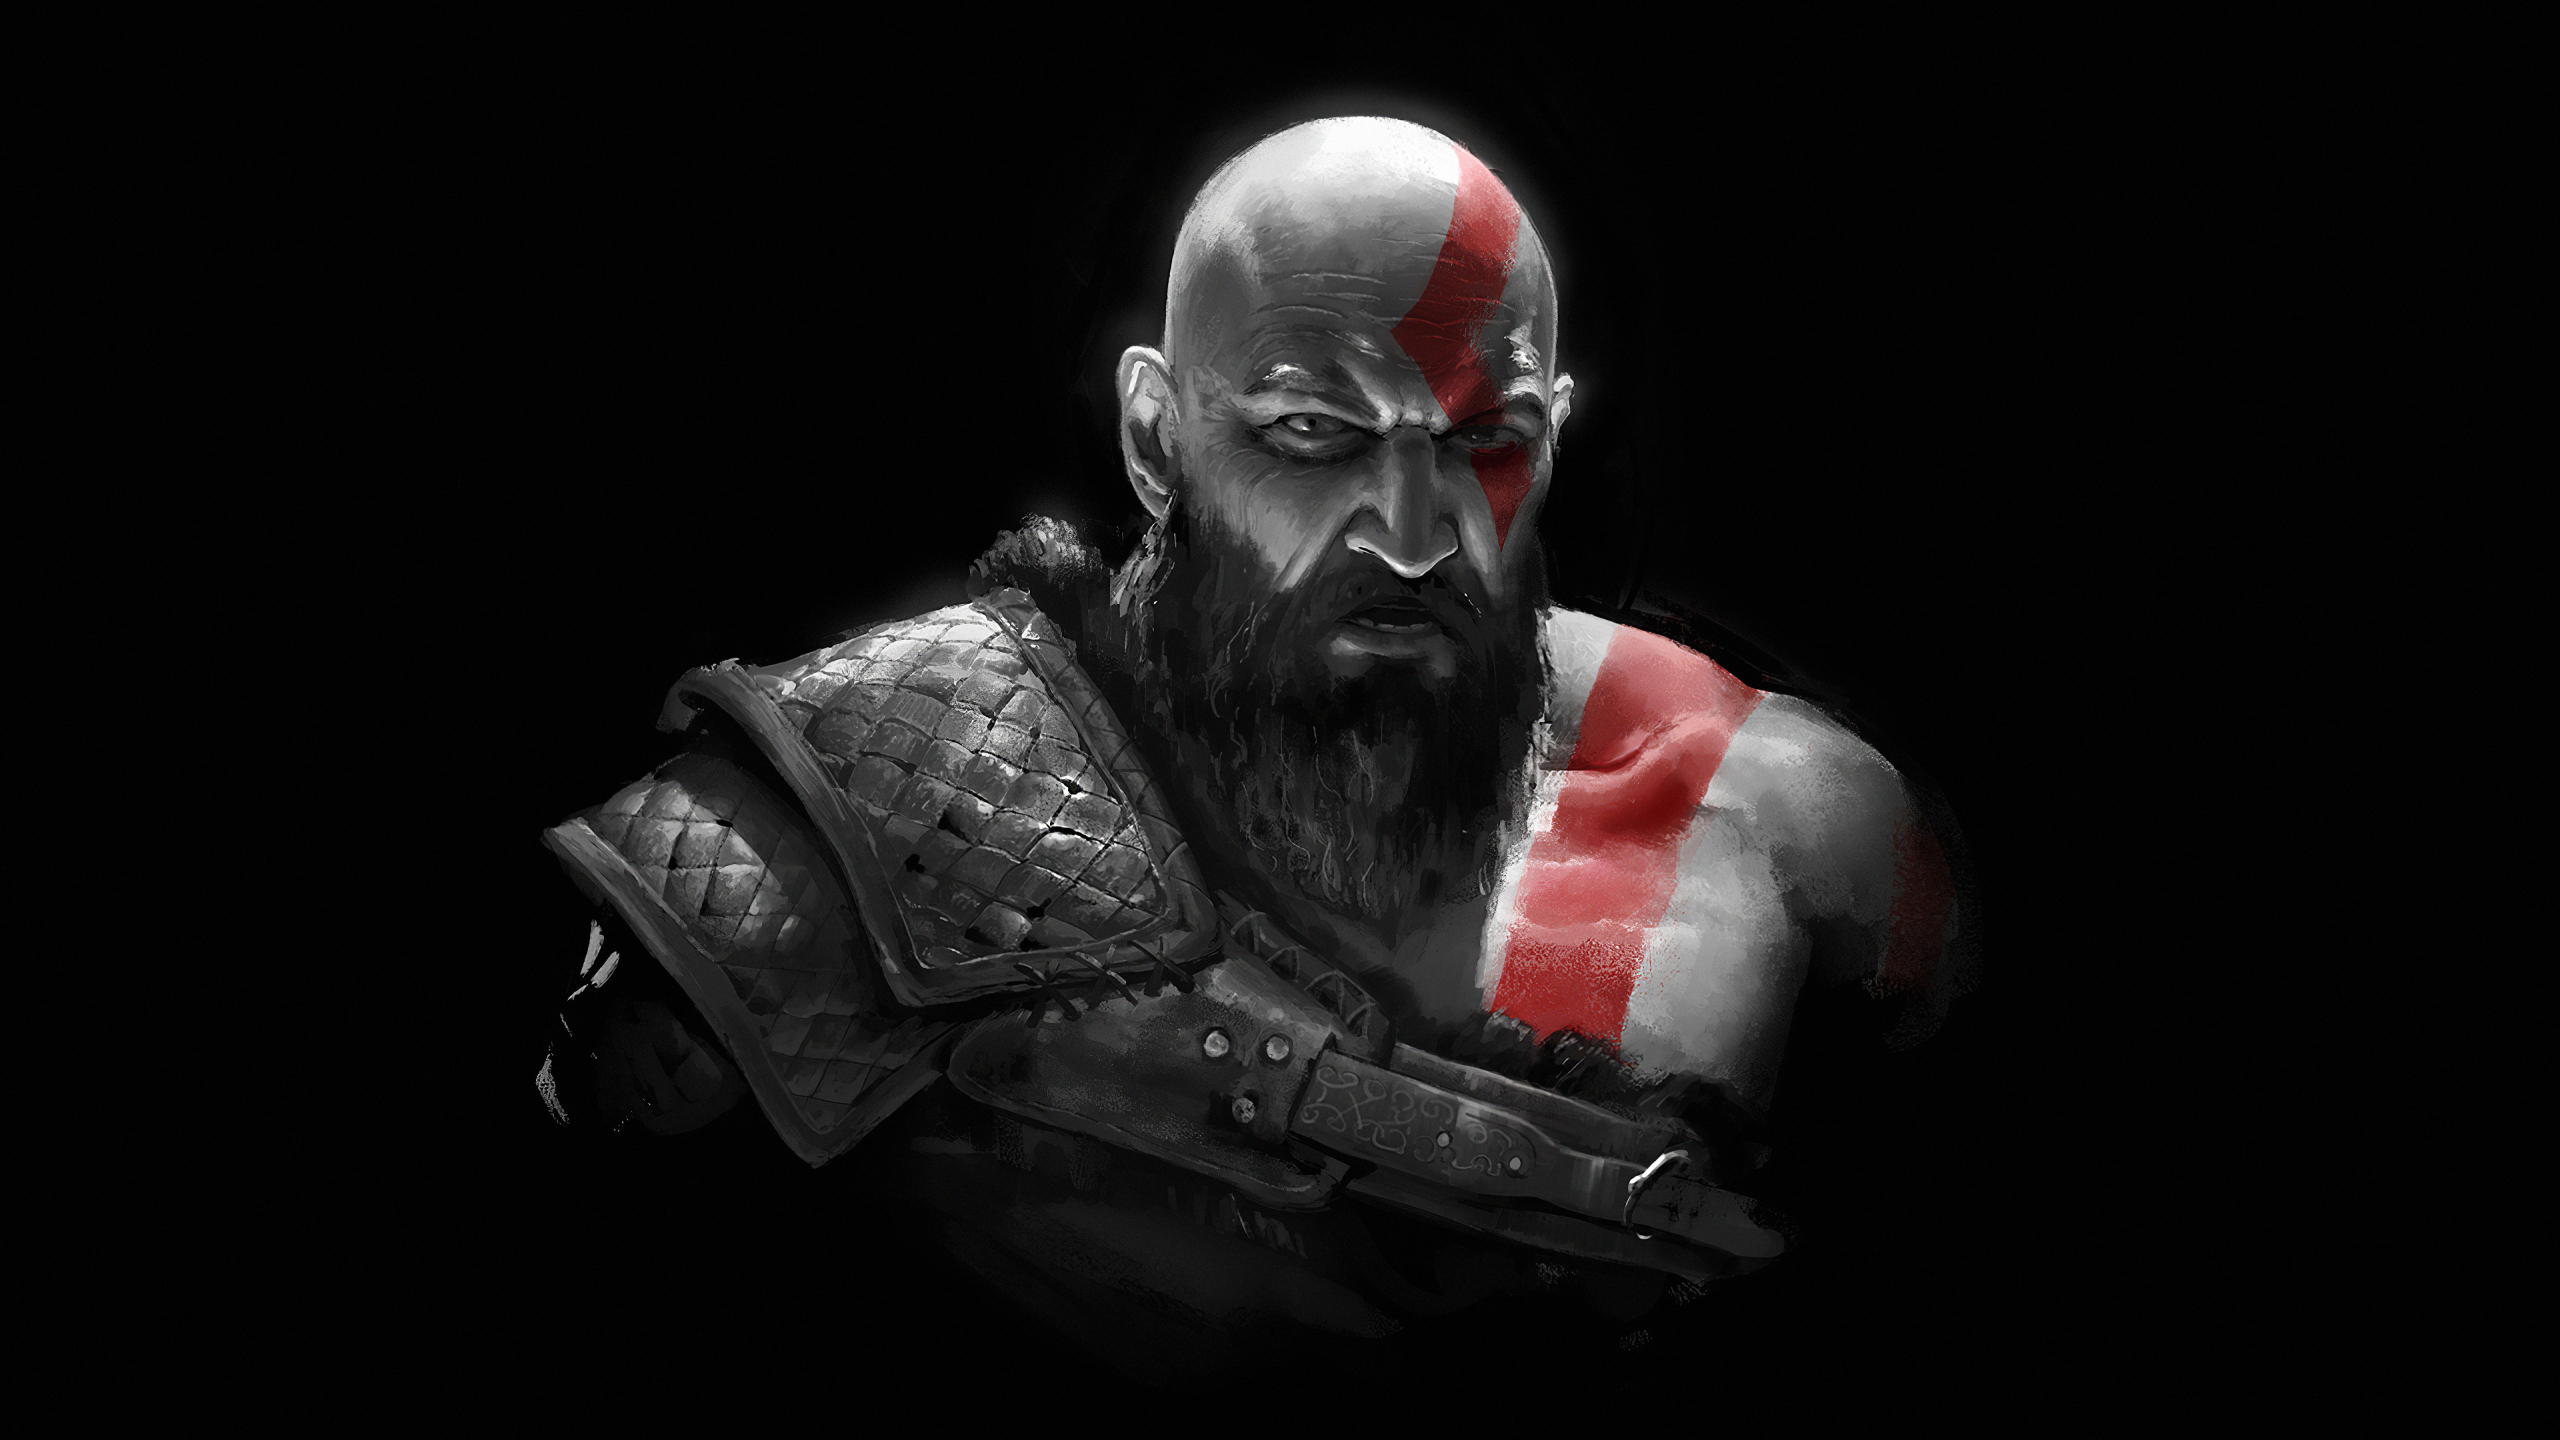 gow 3 kratos download free